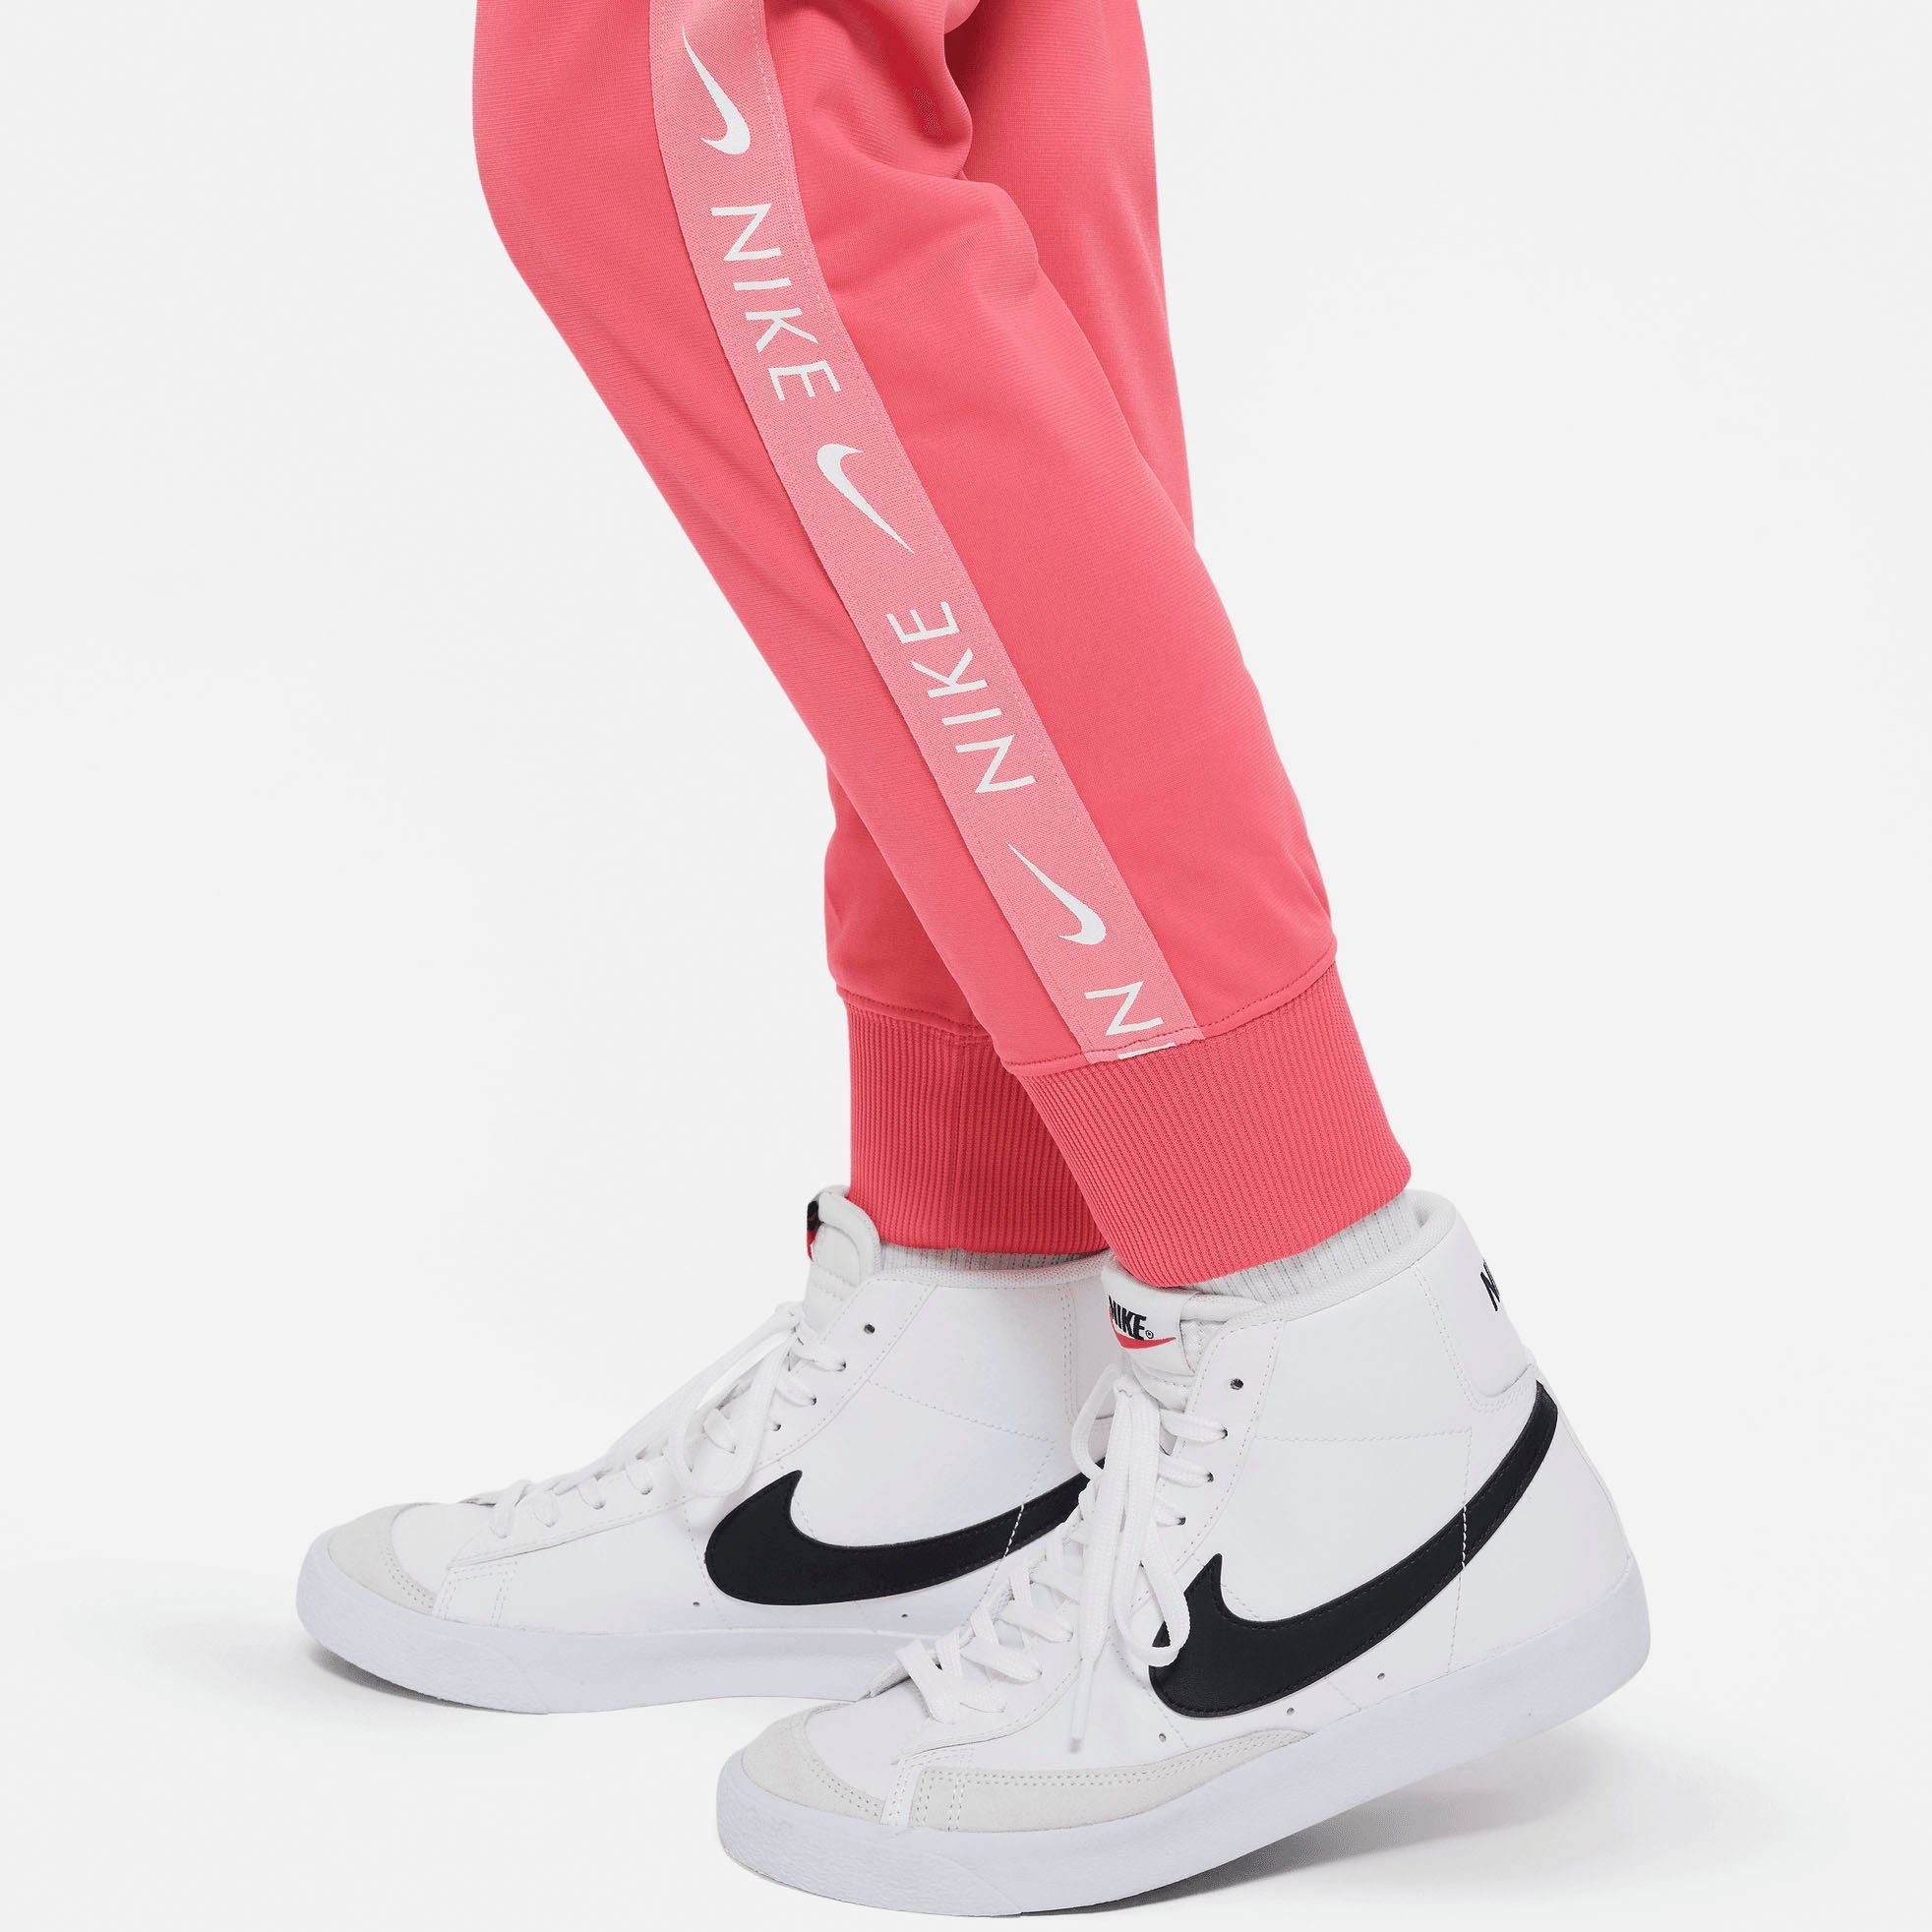 Nike Sportswear Trainingsanzug Big Kids' Tracksuit orange